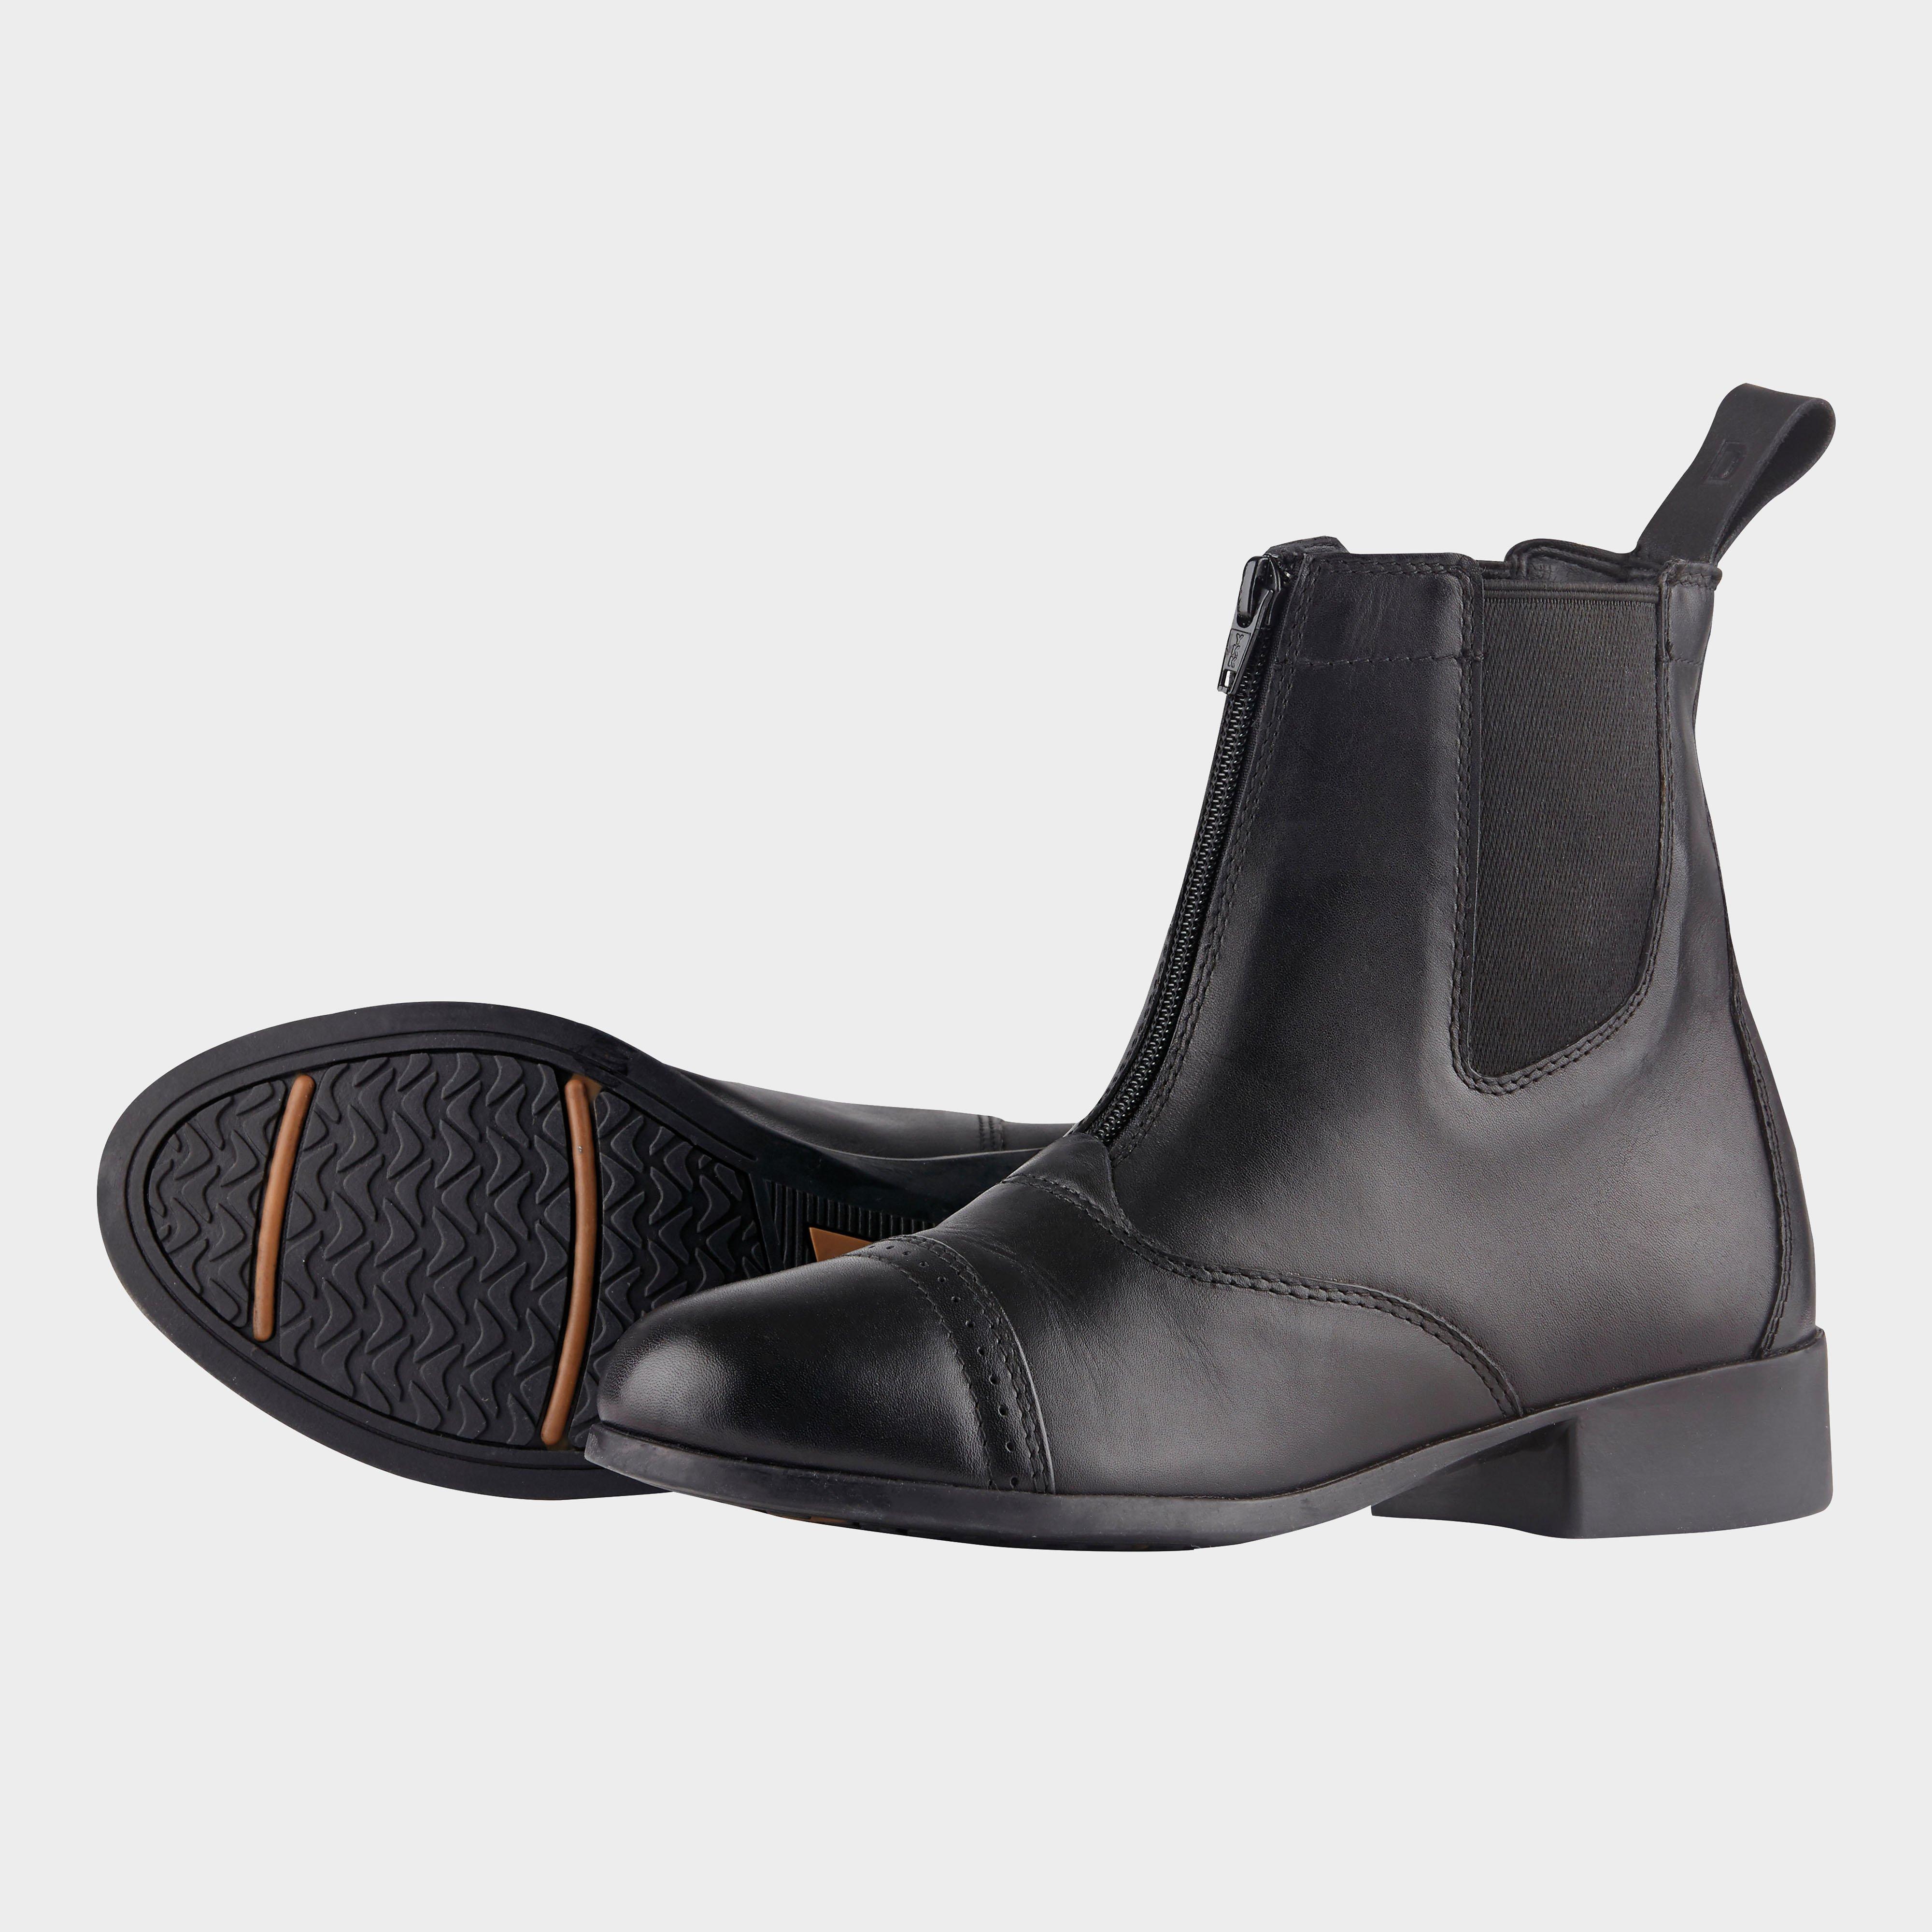  Dublin Mens Elevation Jodhpur Boots II Black1, Black